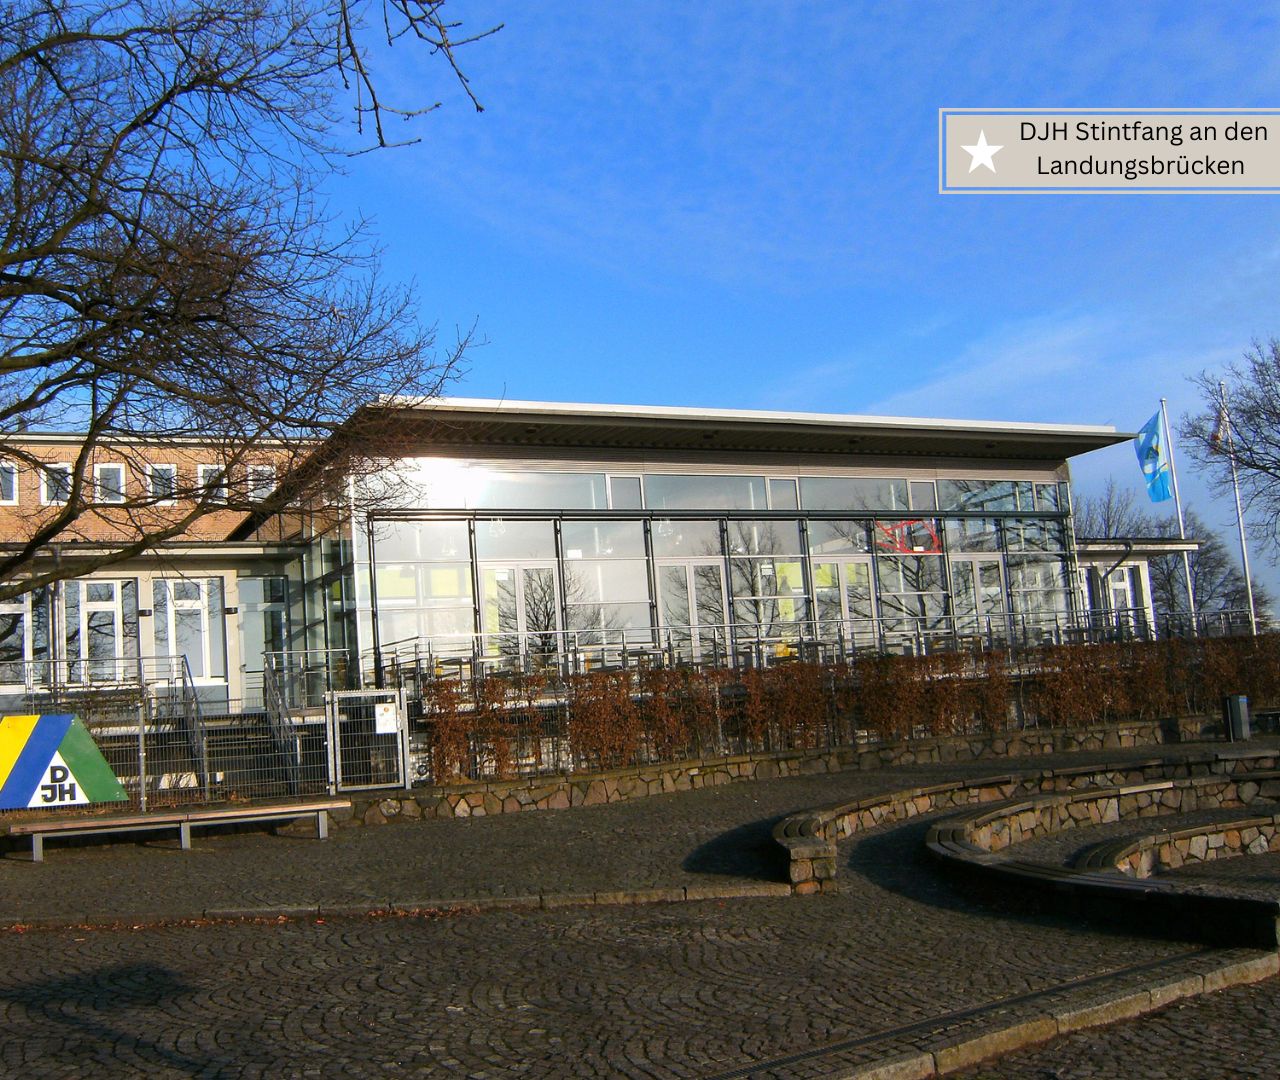 die besten Kinderhotels in Hamburg - DJH Stintfang an den Landungsbrücken